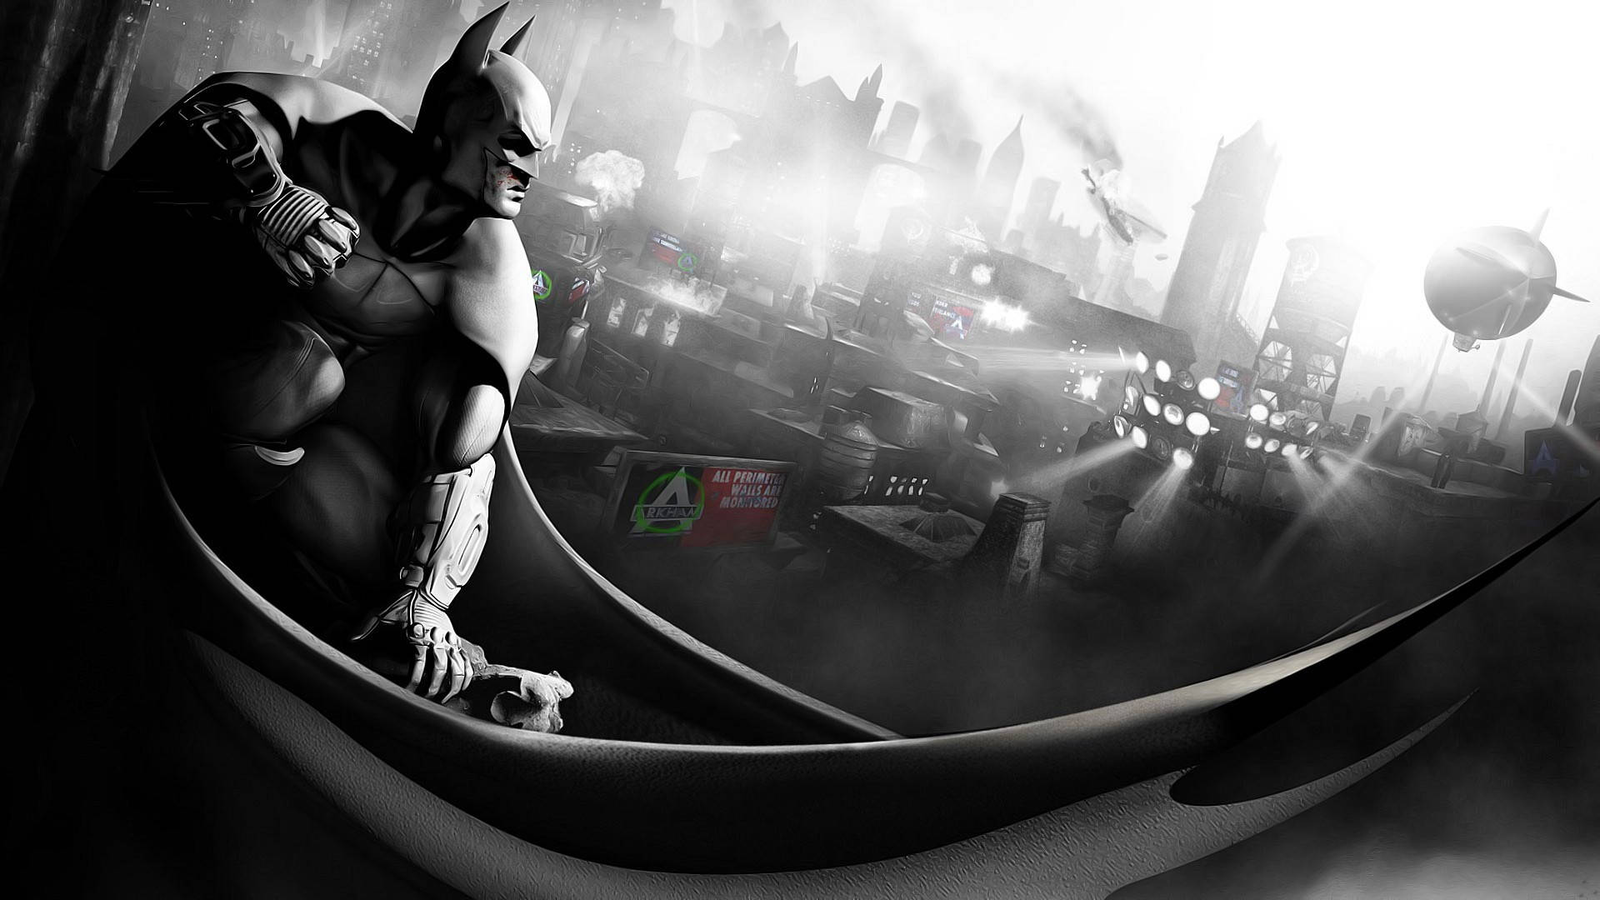 Batman: Arkham Trilogy for Nintendo Switch is delayed until December